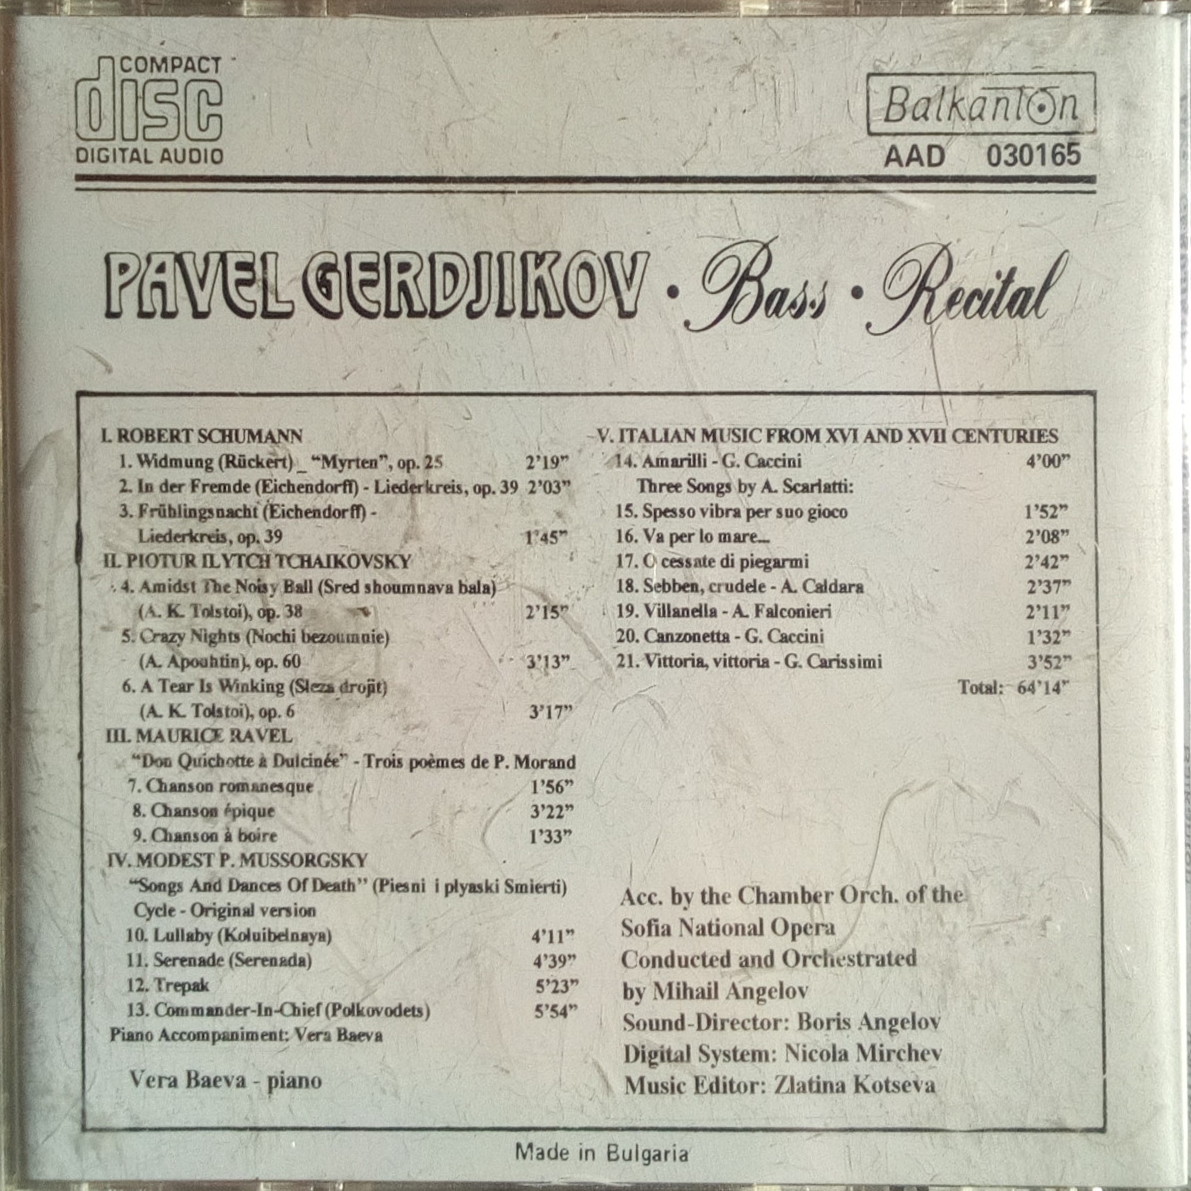 Pavel GERDJIKOV, bass. Recital